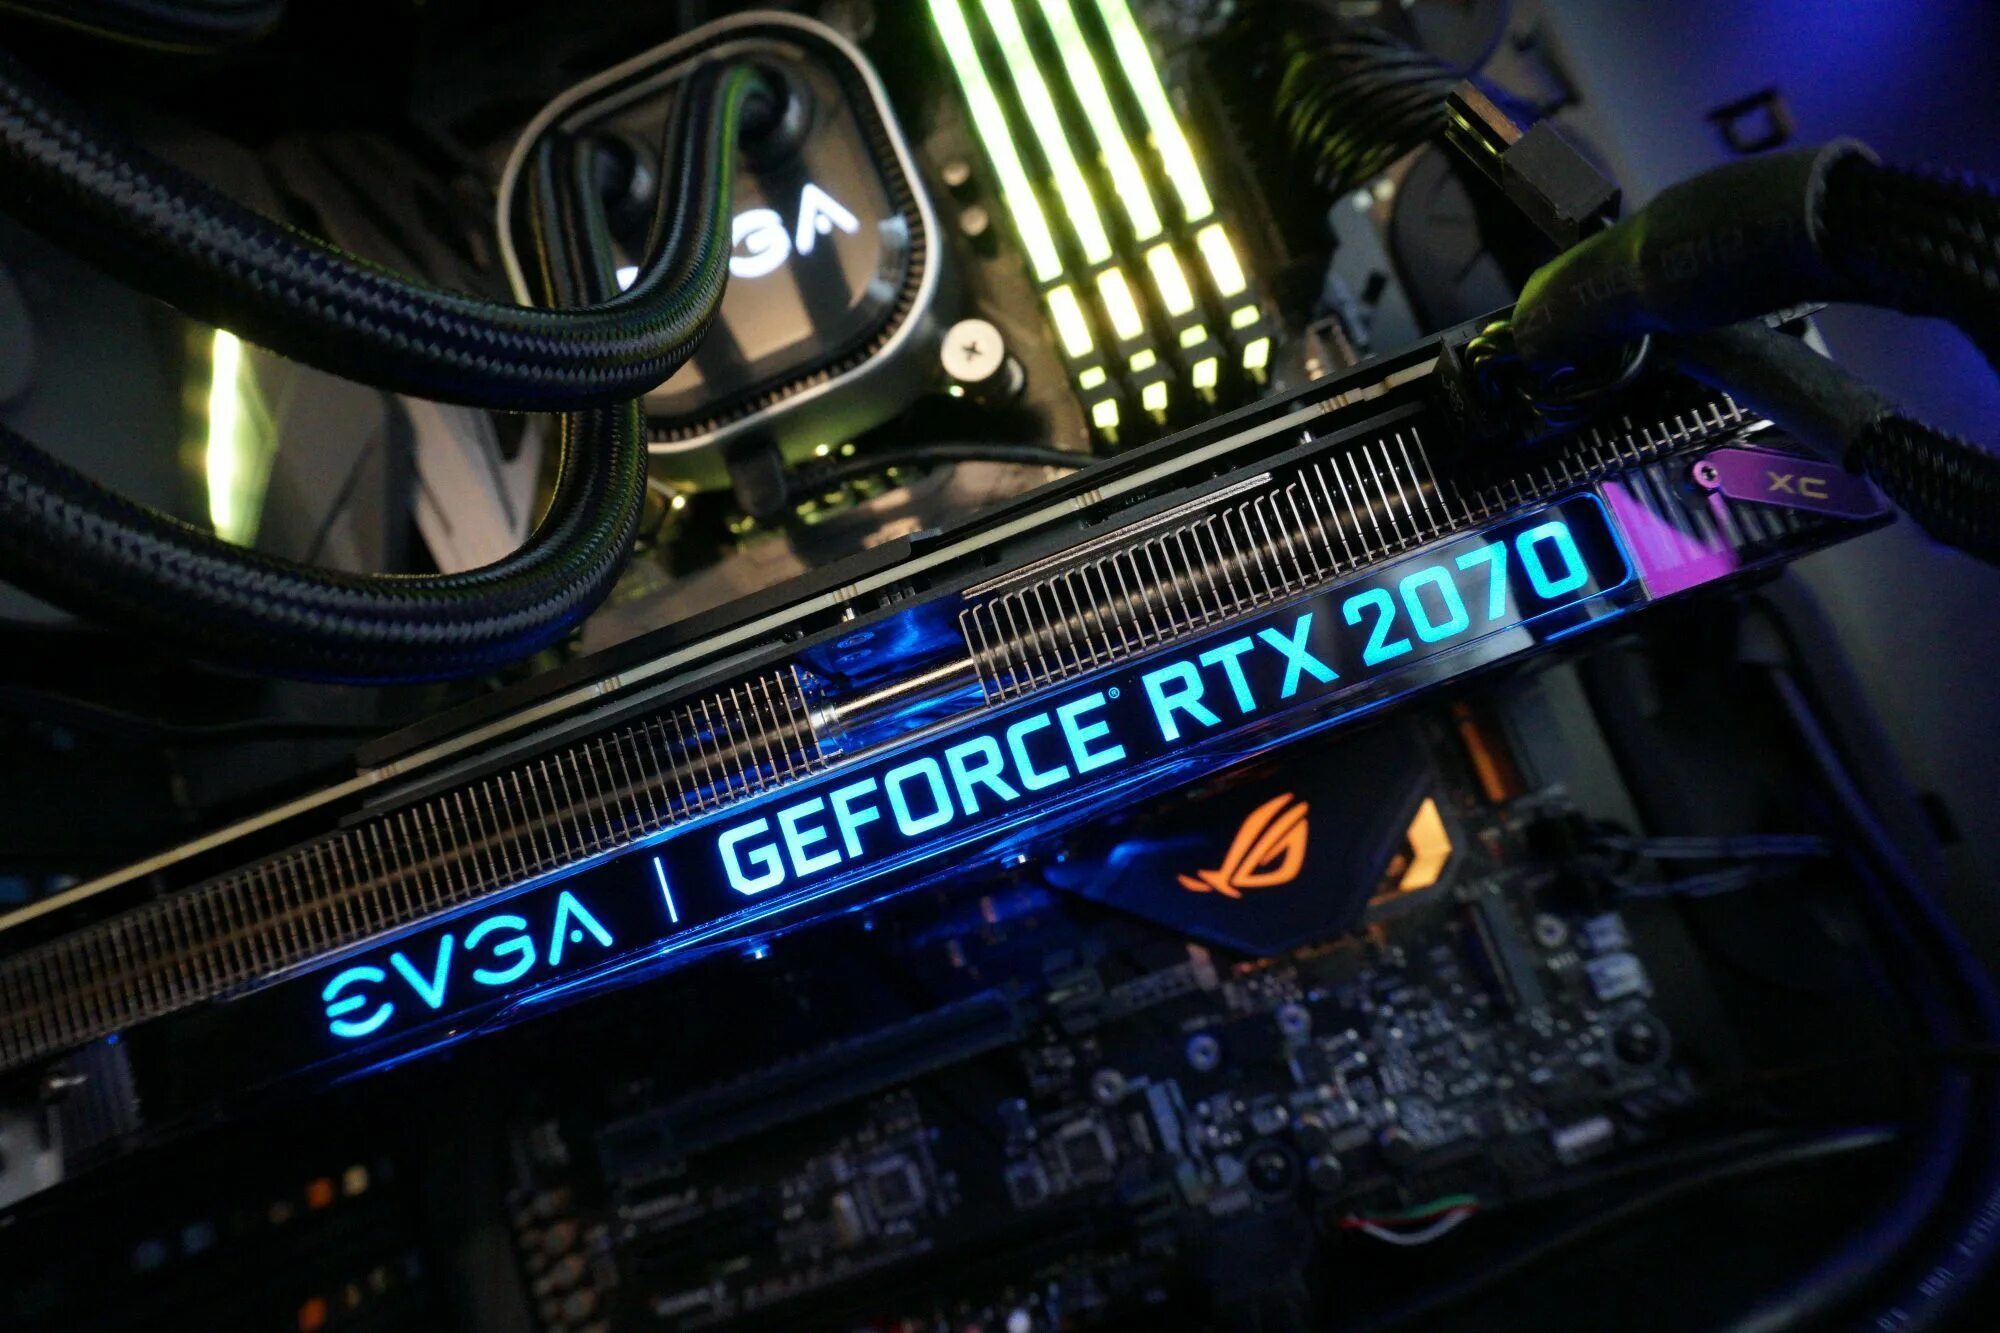 EVGA RTX 3080 ti. GPU:NVIDIA RTX 2070. RTX 2070 В ПК. RTX 2070 EVGA — 8gb. На что способна видеокарта